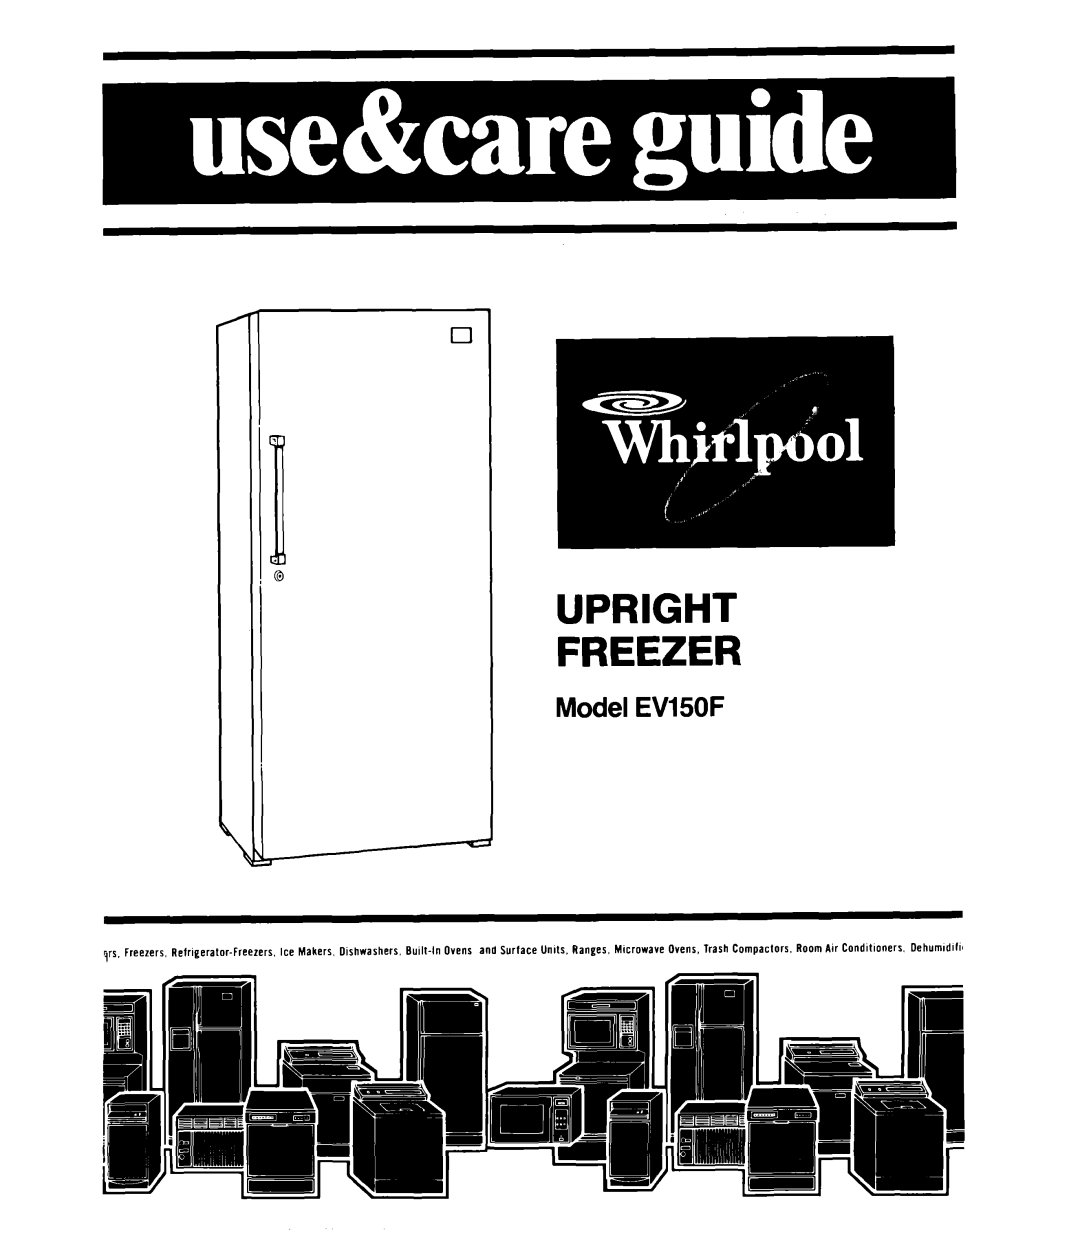 Whirlpool manual Upright Freezer, Model EV150F 